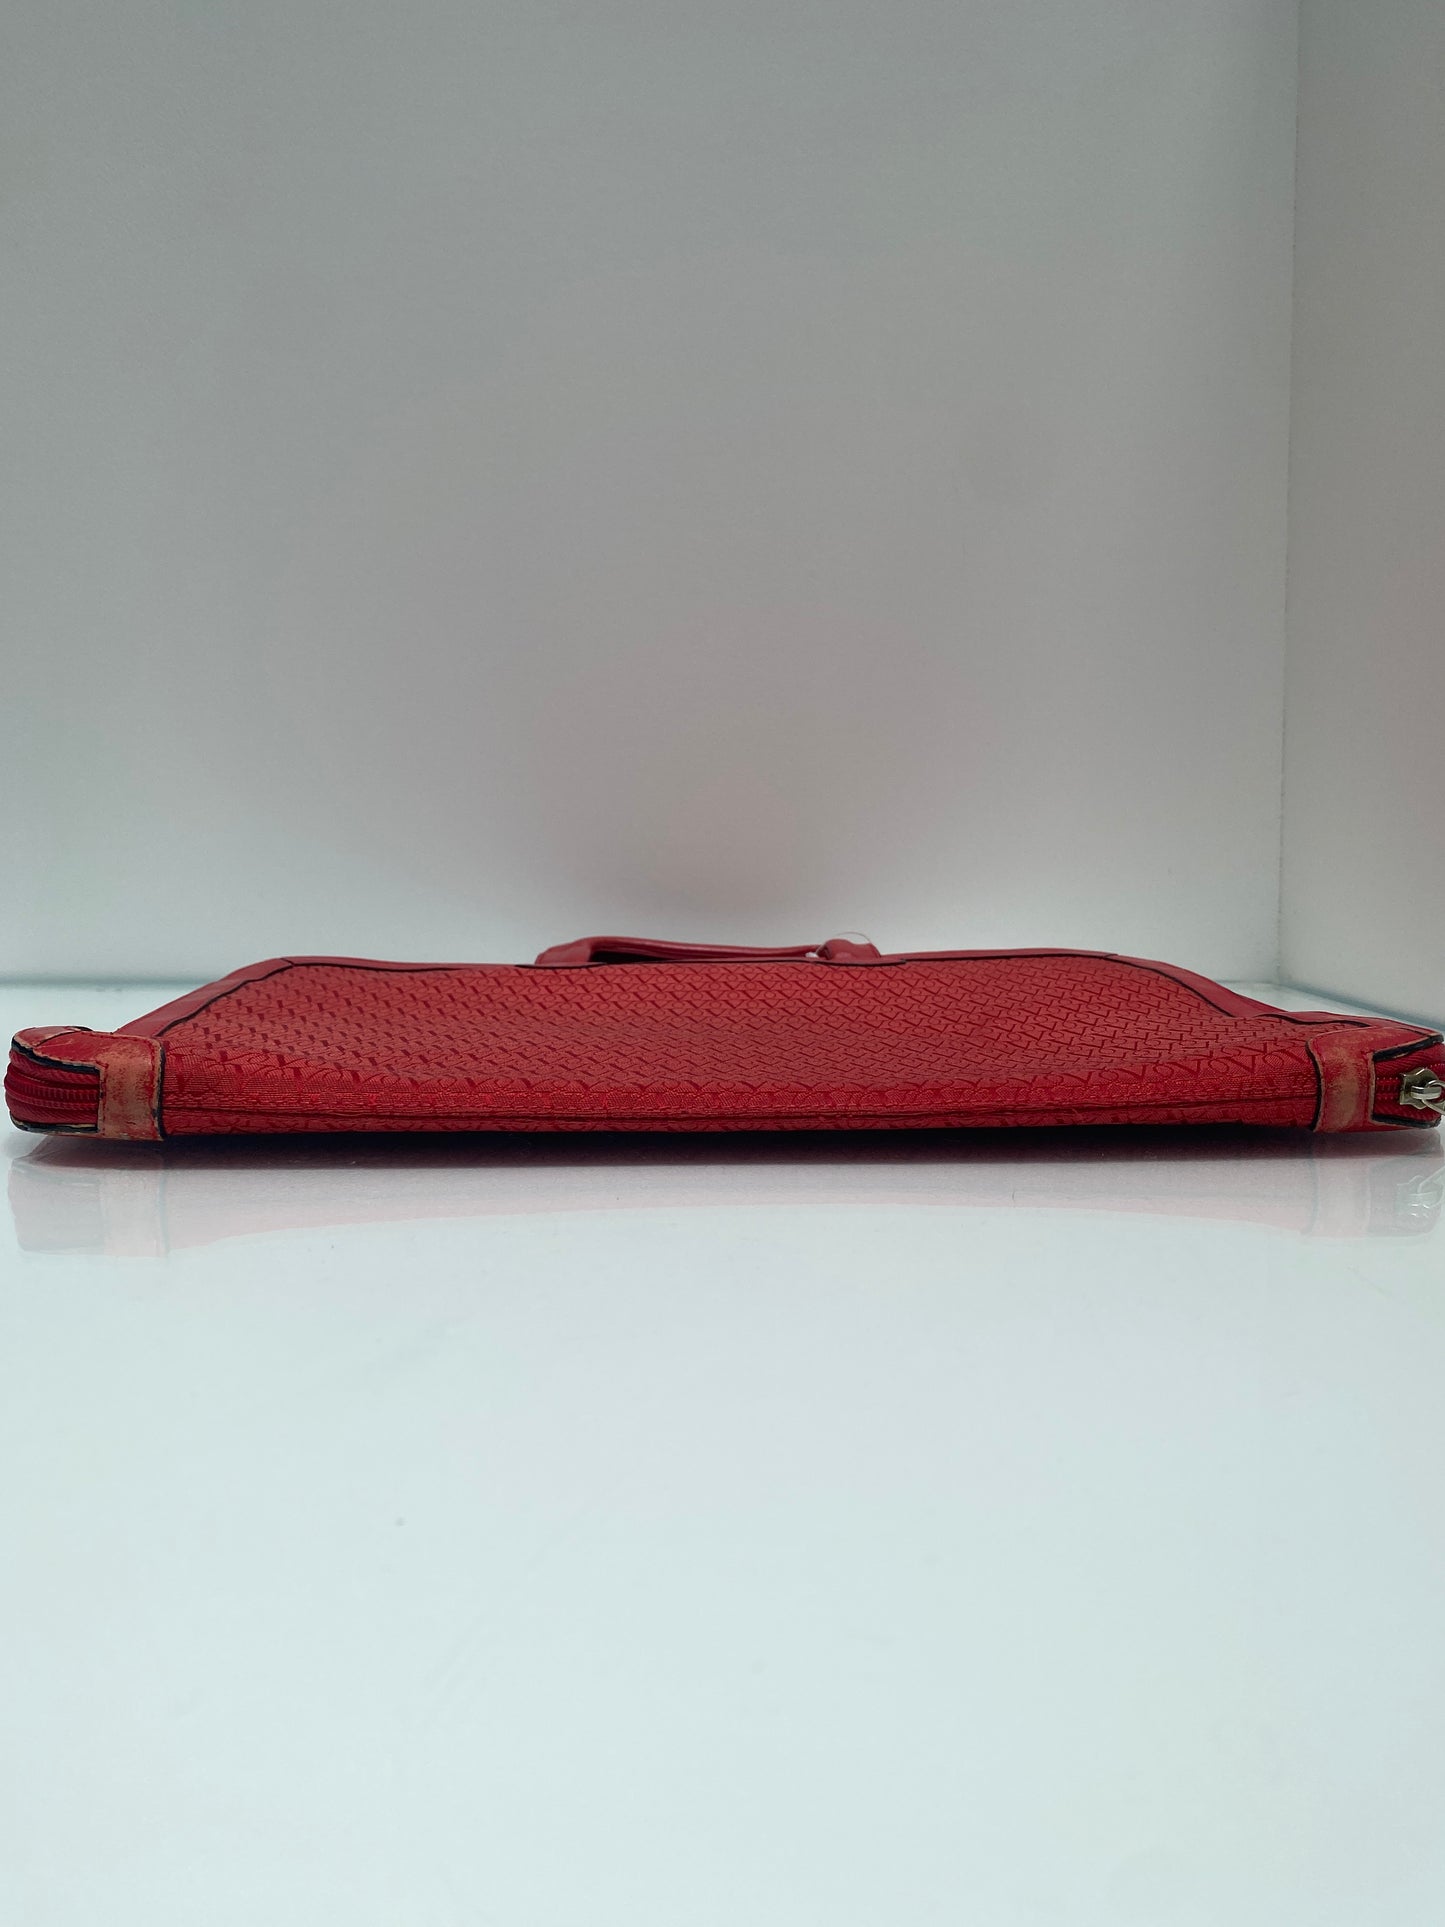 Valentino Red Canvas Briefcase